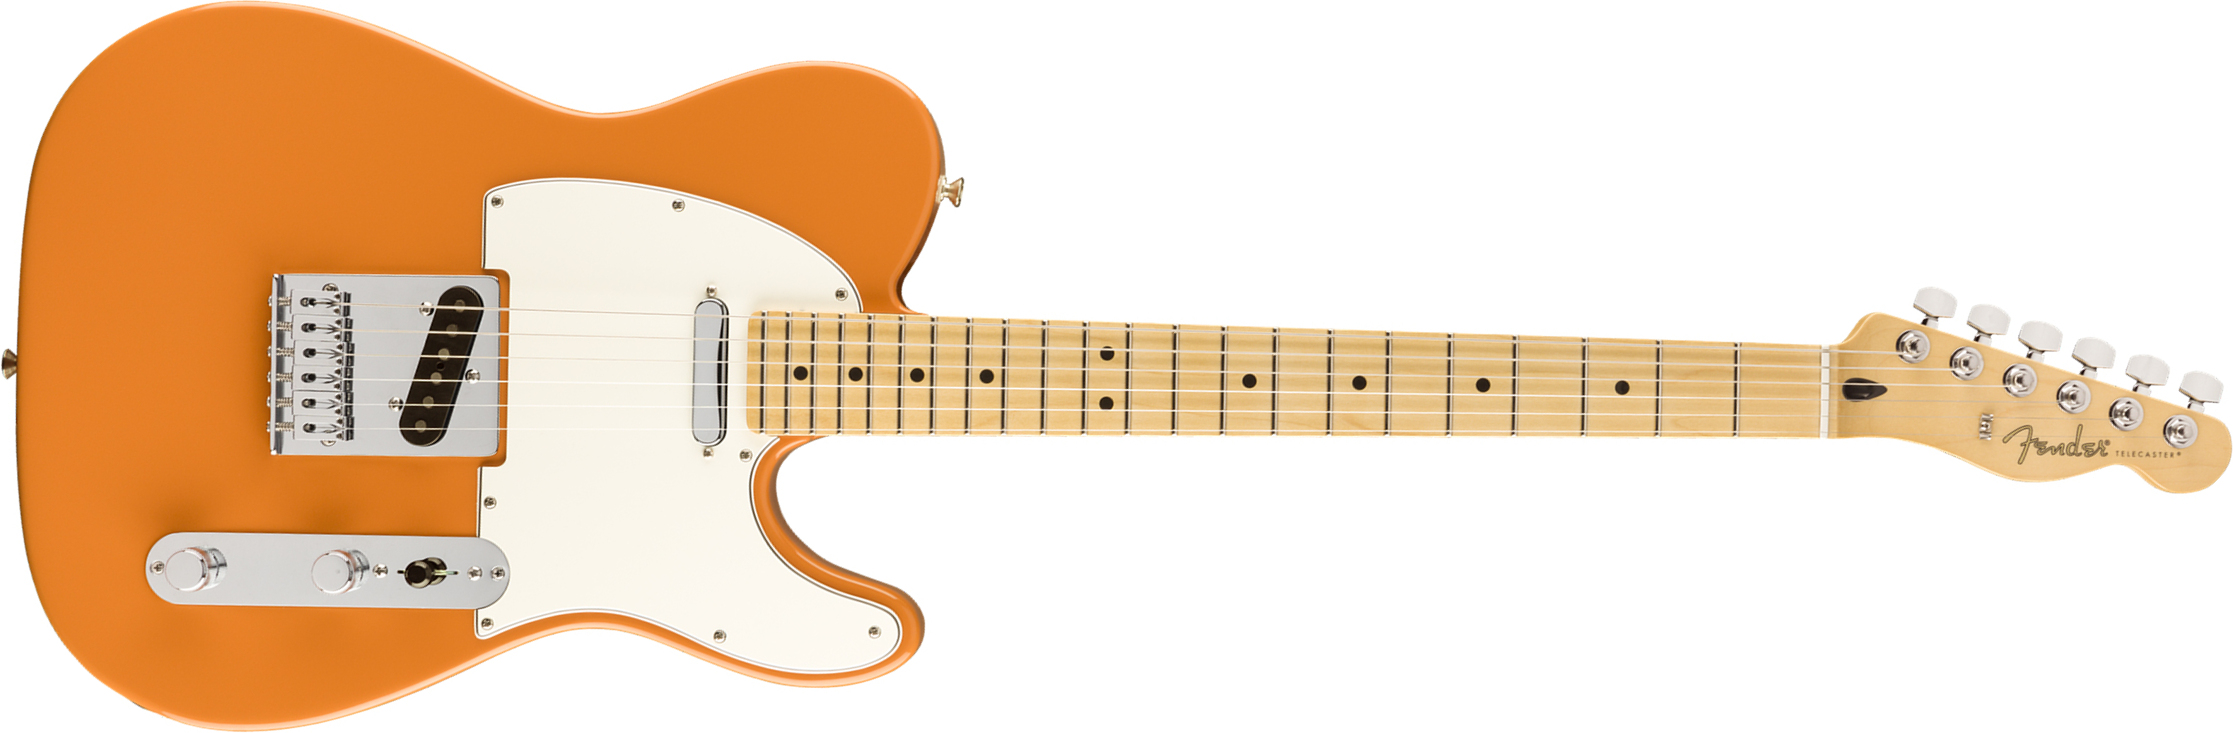 Fender Tele Player Mex Mn - Capri Orange - Tel shape electric guitar - Main picture